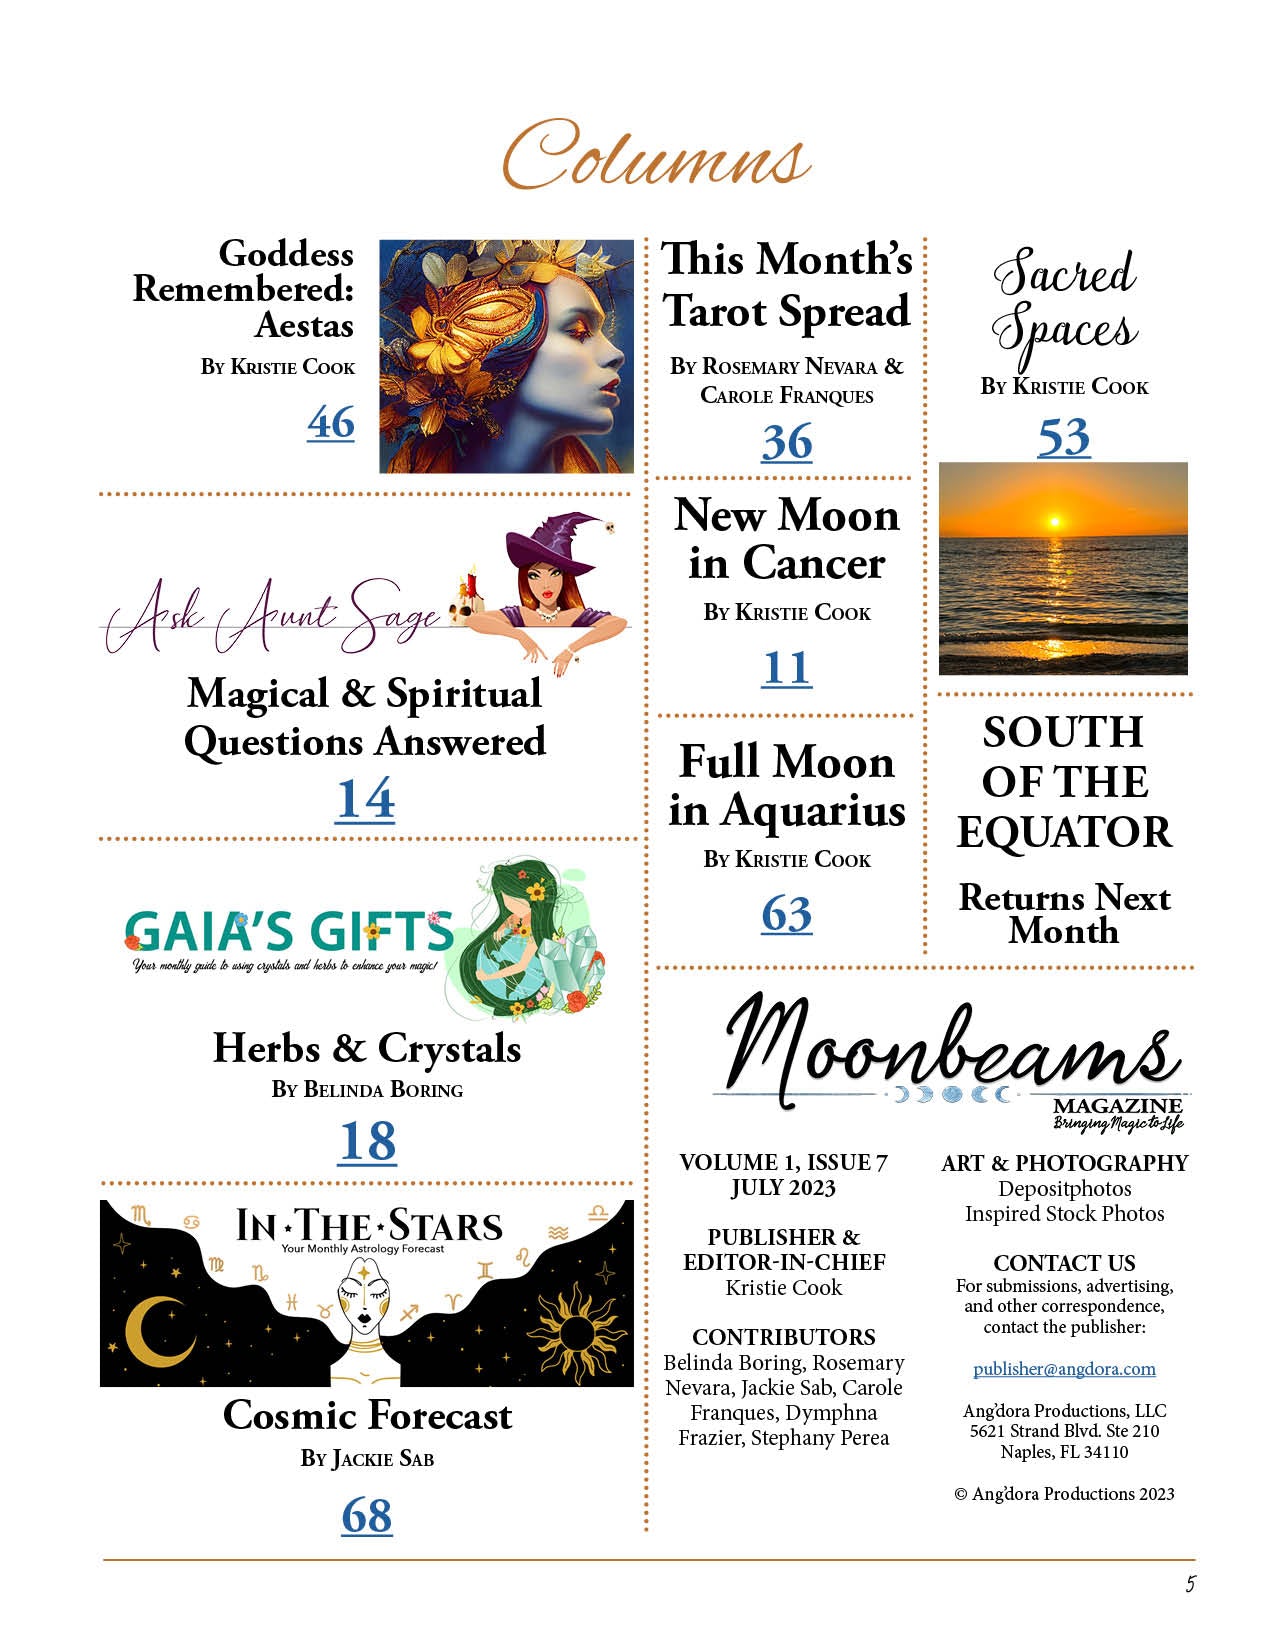 Moonbeams Magazine July 2023 - Single Issue